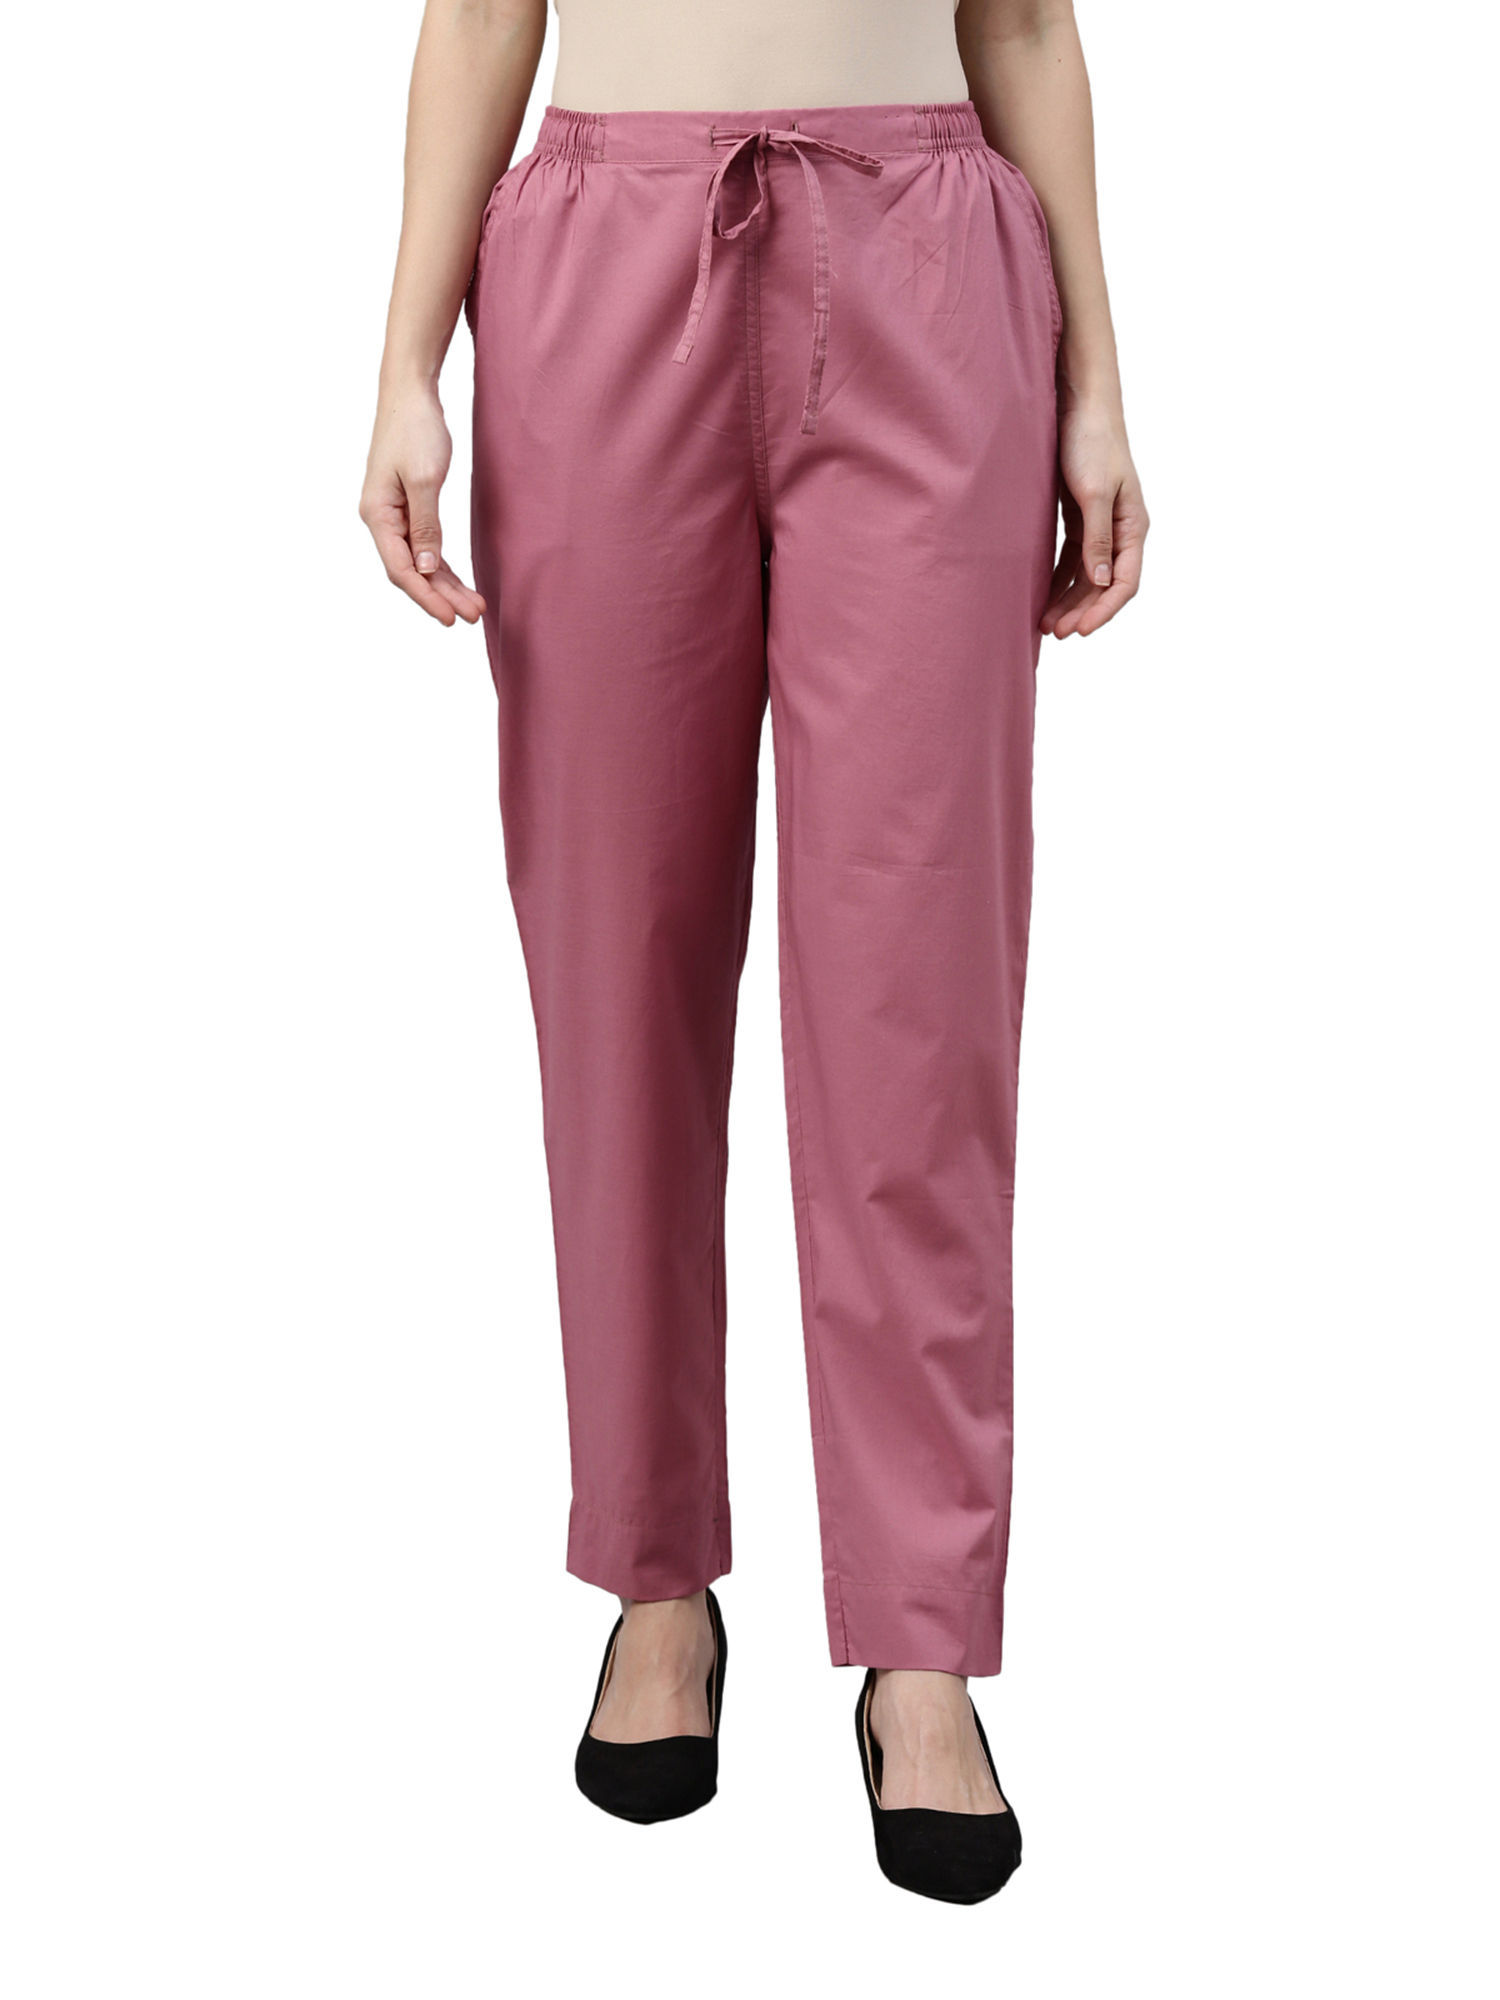 Womens narrow pant bottom design in easy way  Ladies trouser design   Capri design  Palazzo pants  YouTube